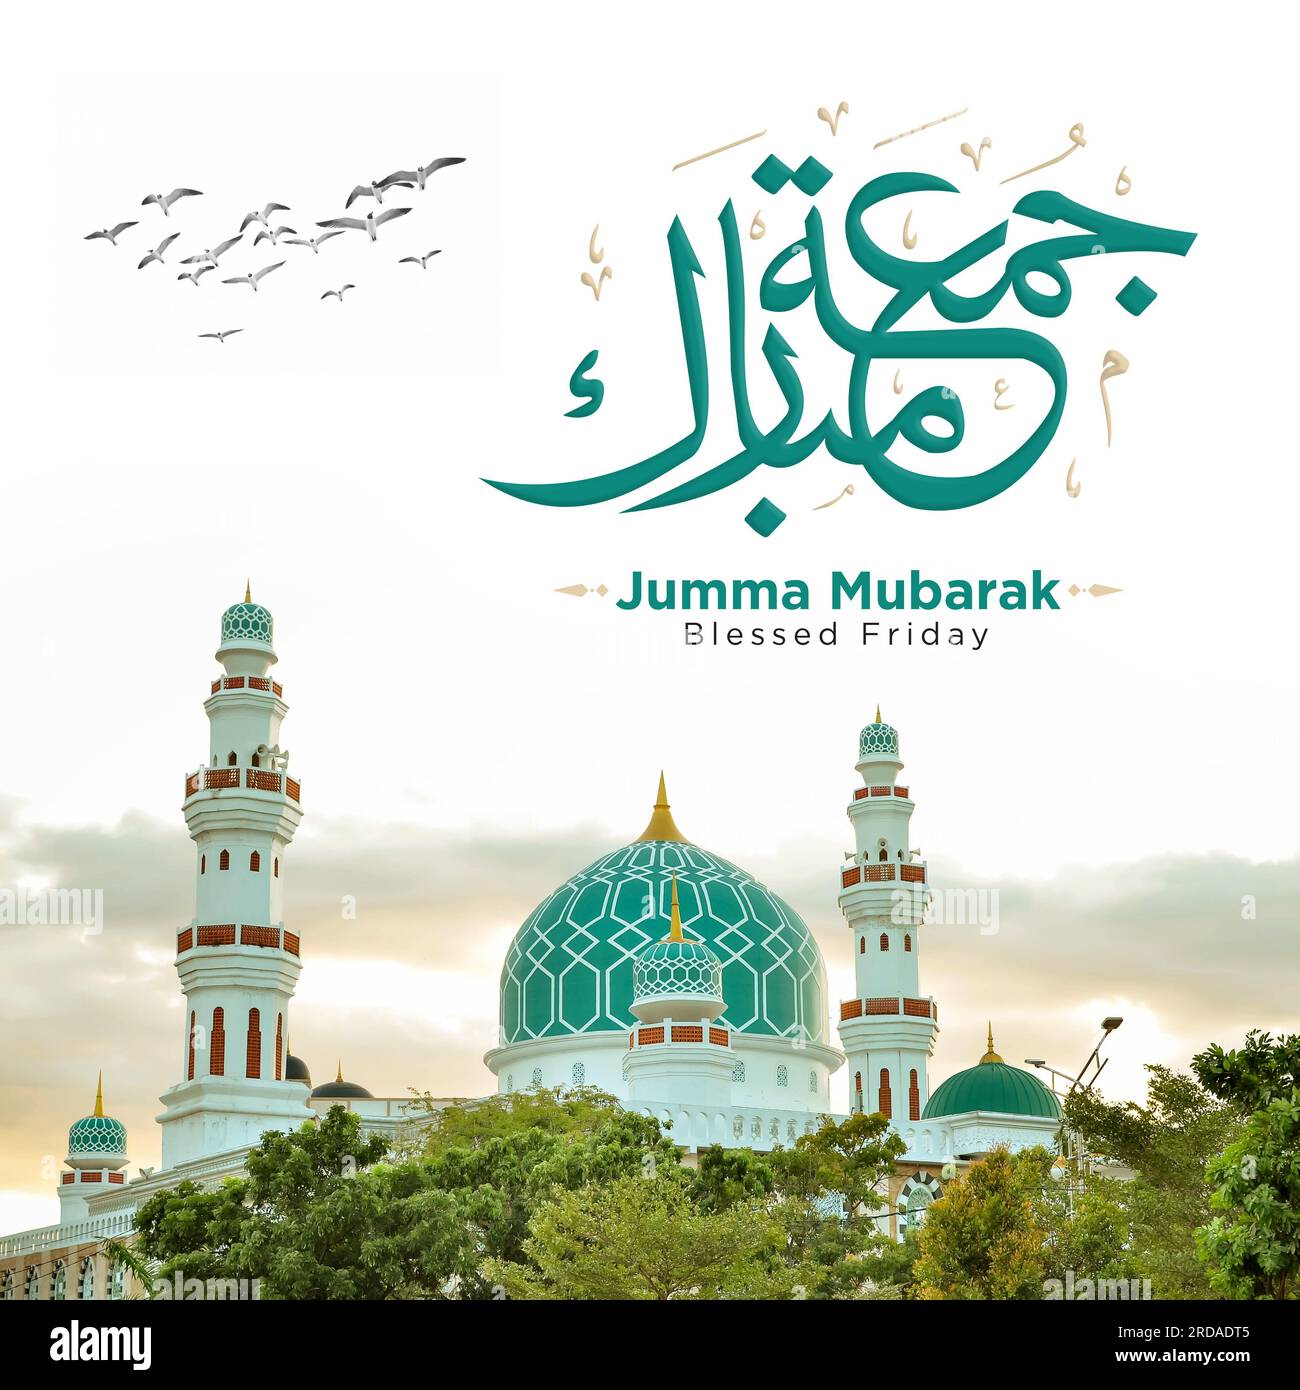 Biglietto d'auguri del Beato venerdì, splendida moschea con vista, Jumma Mubarak. Foto Stock